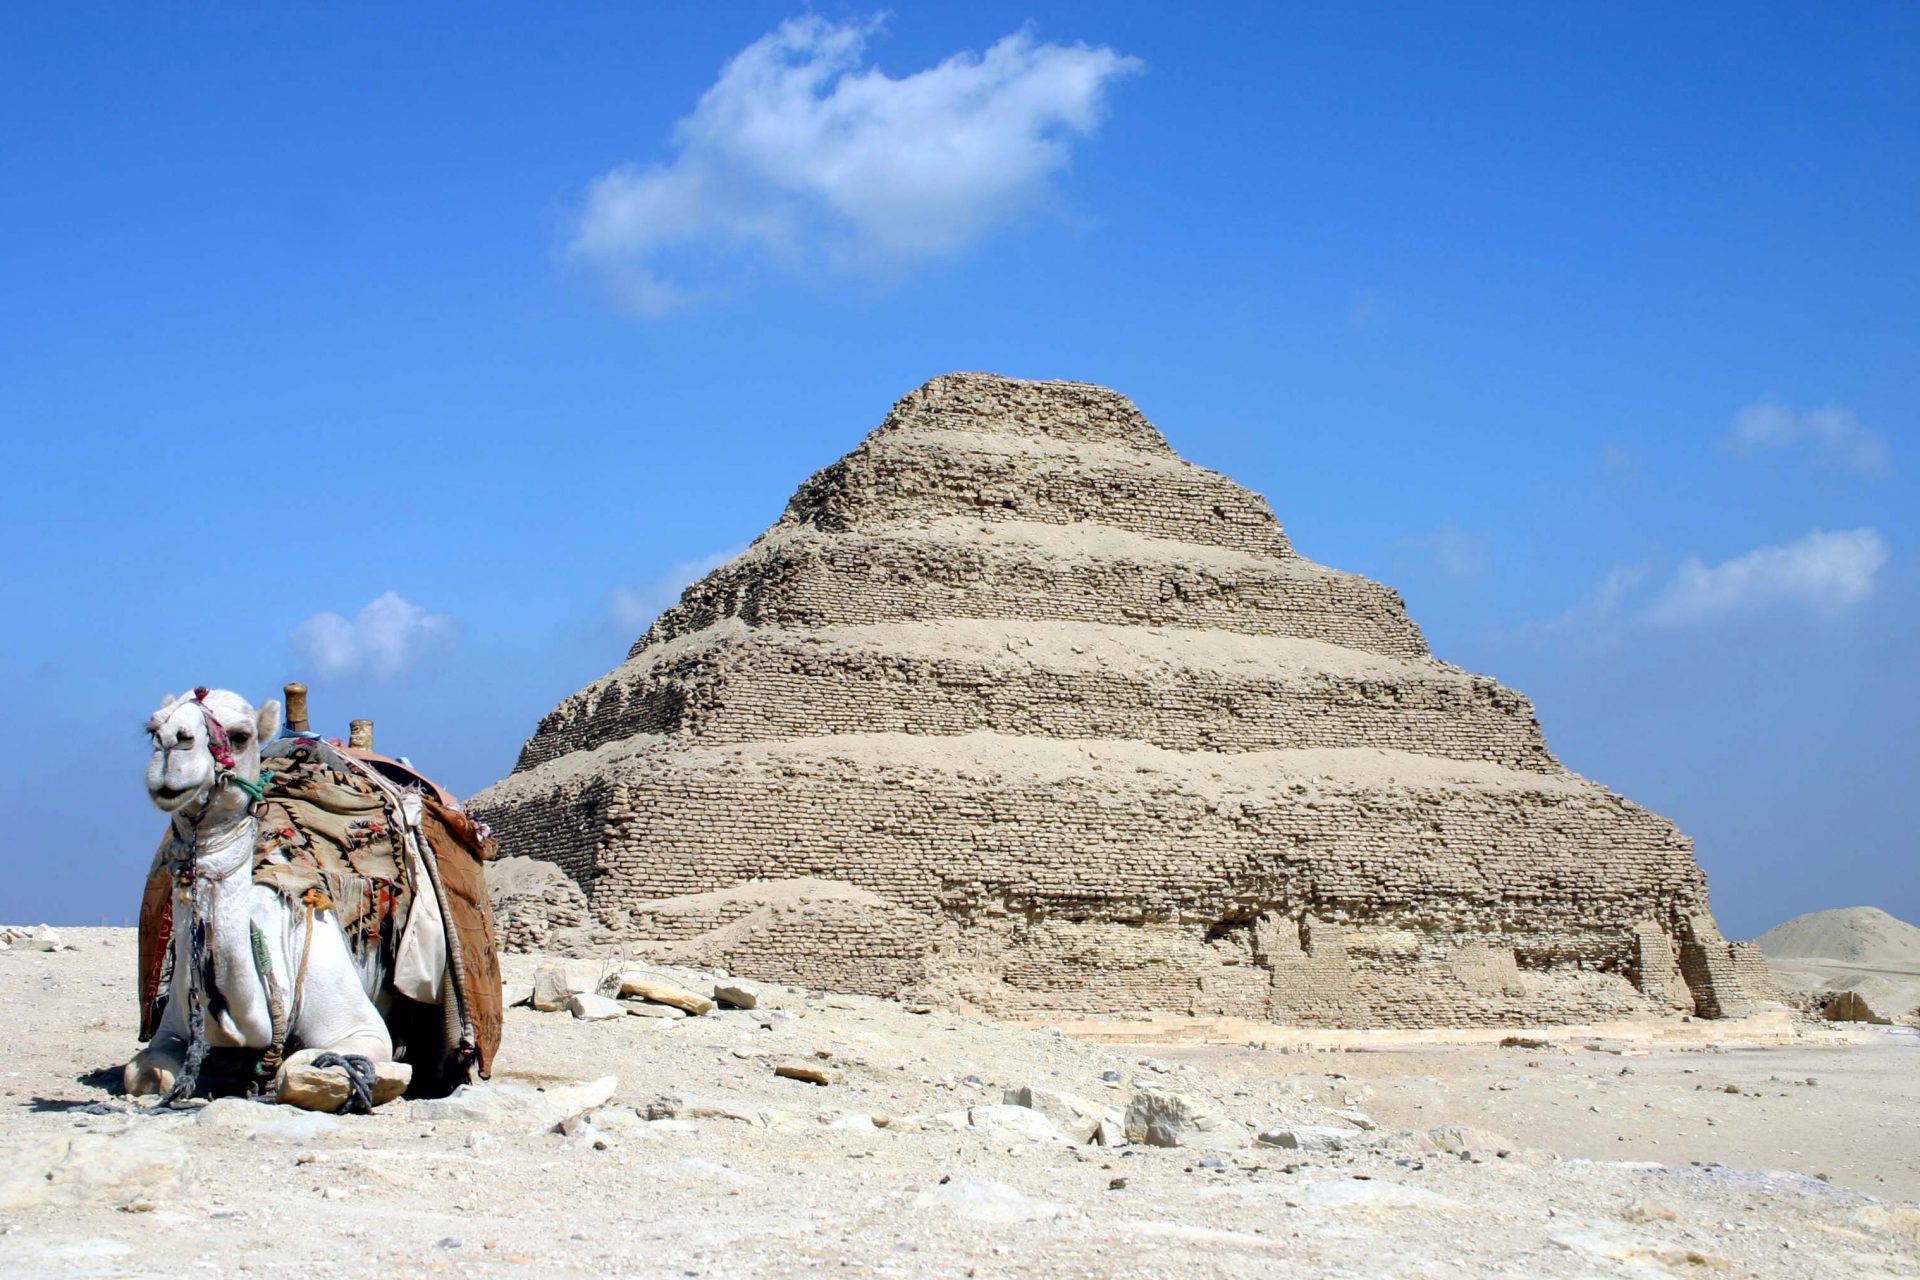 La pyramide de Djéser